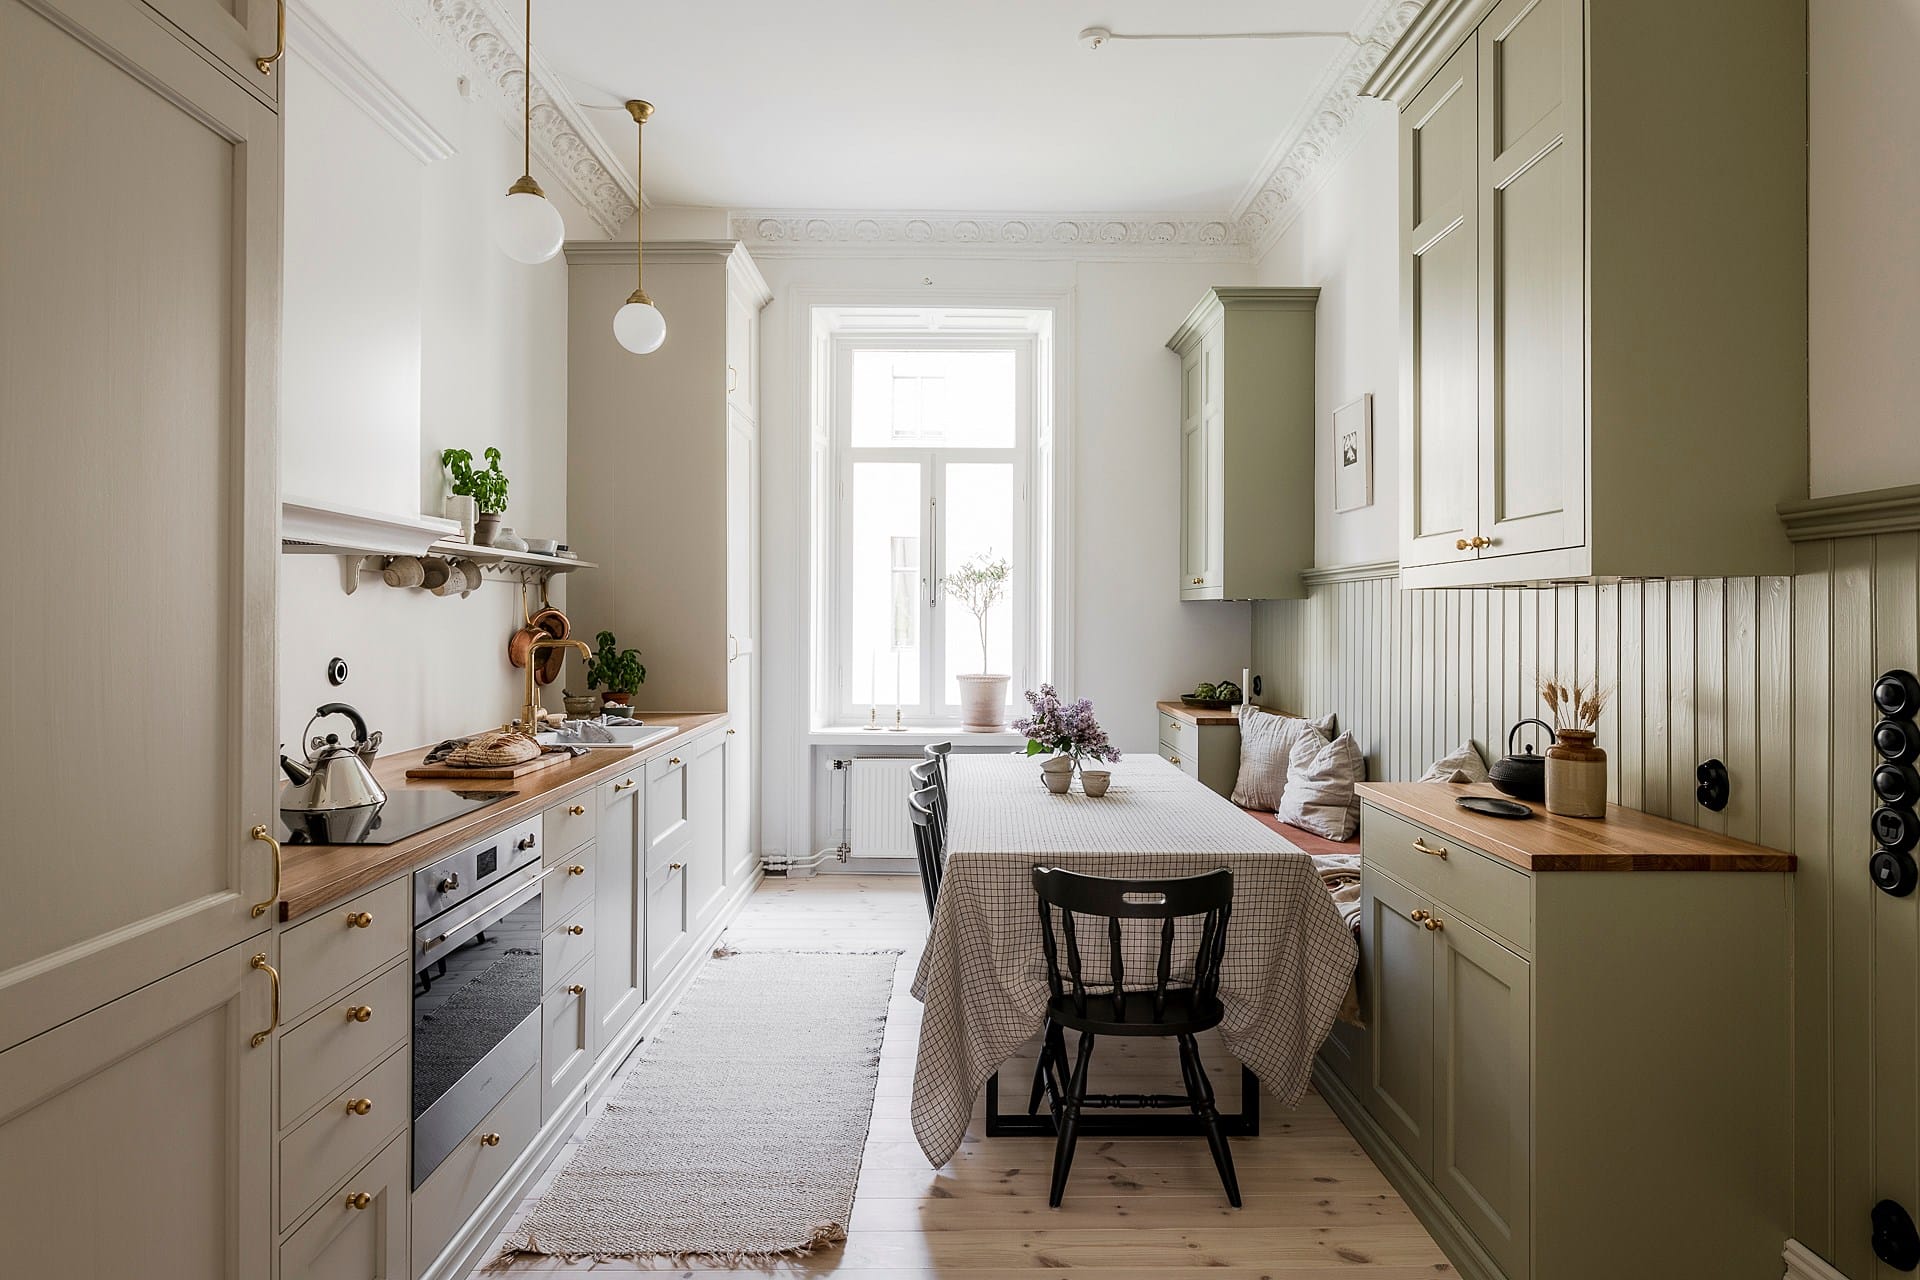 18 Sage green kitchen cabinets for a subtle, fresh look - COCO LAPINE  DESIGNCOCO LAPINE DESIGN